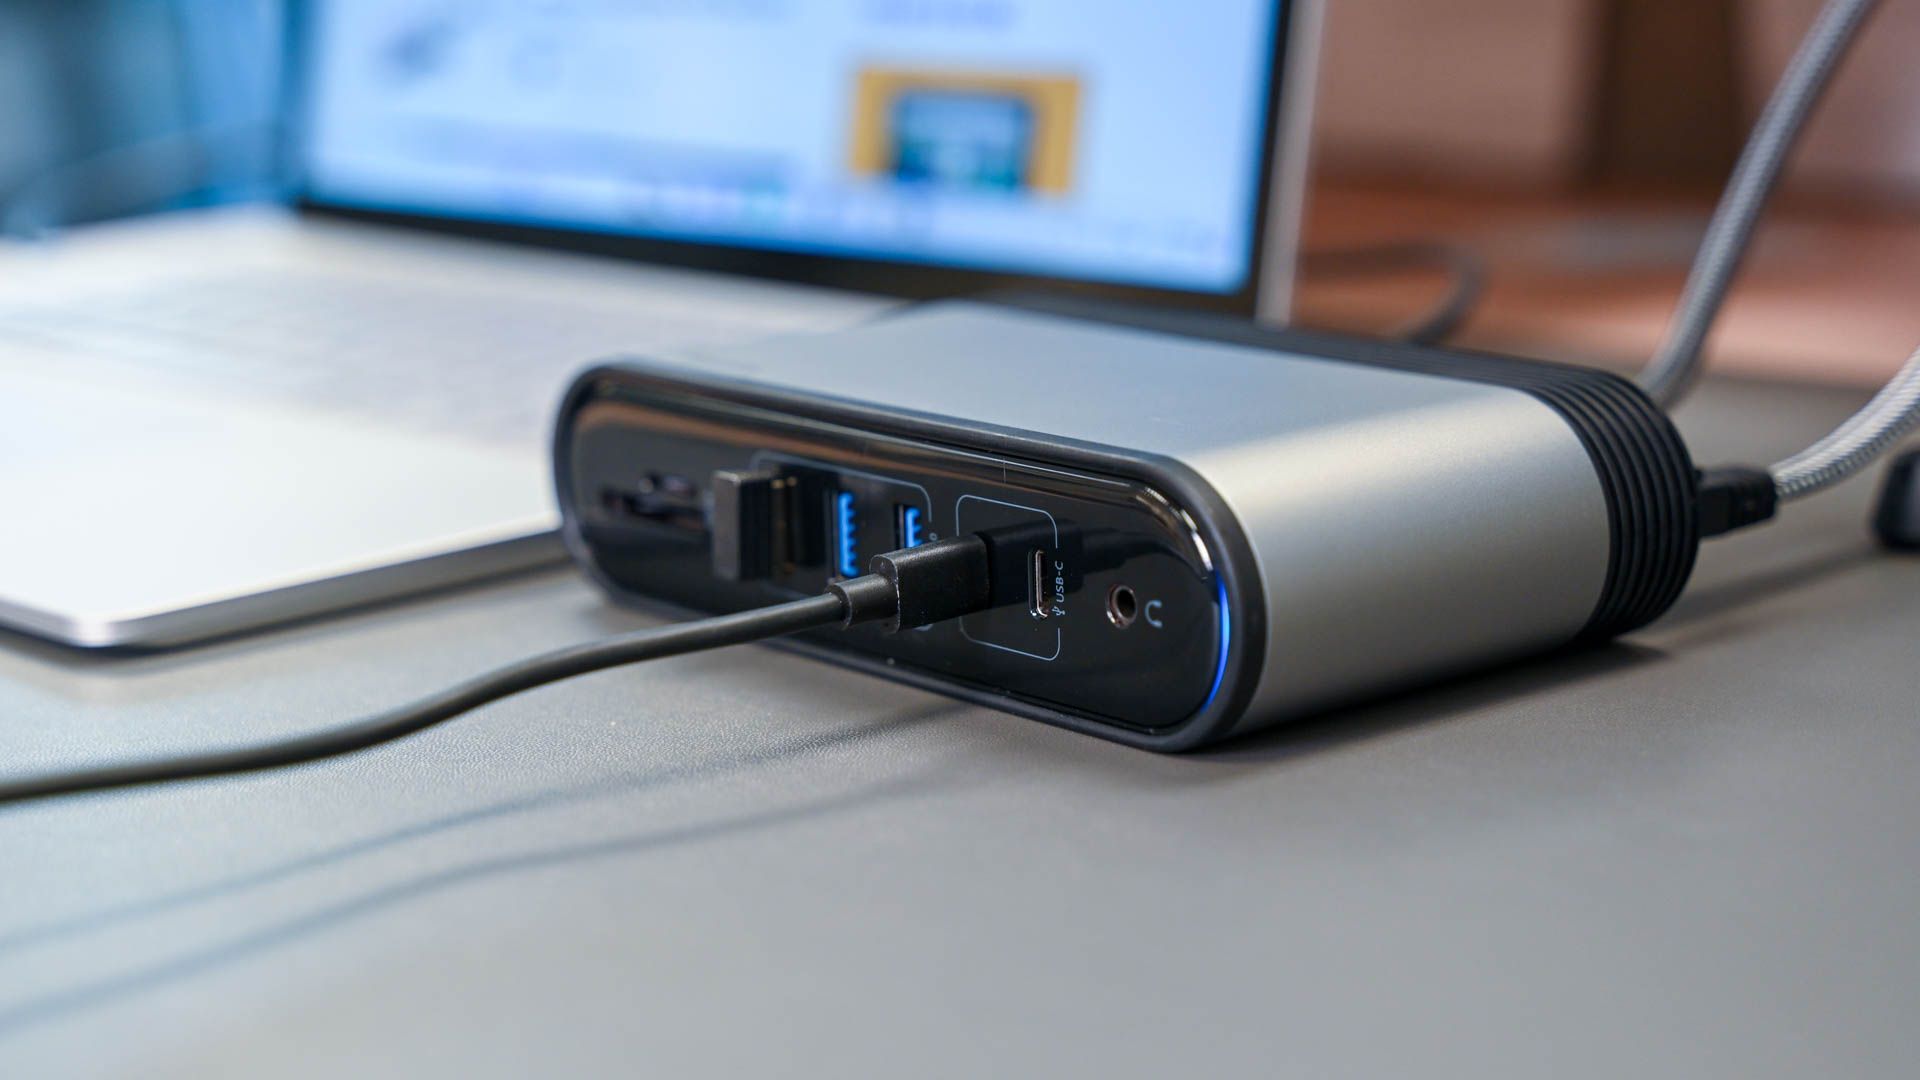 Baseus USB C Hub plugged into a laptop